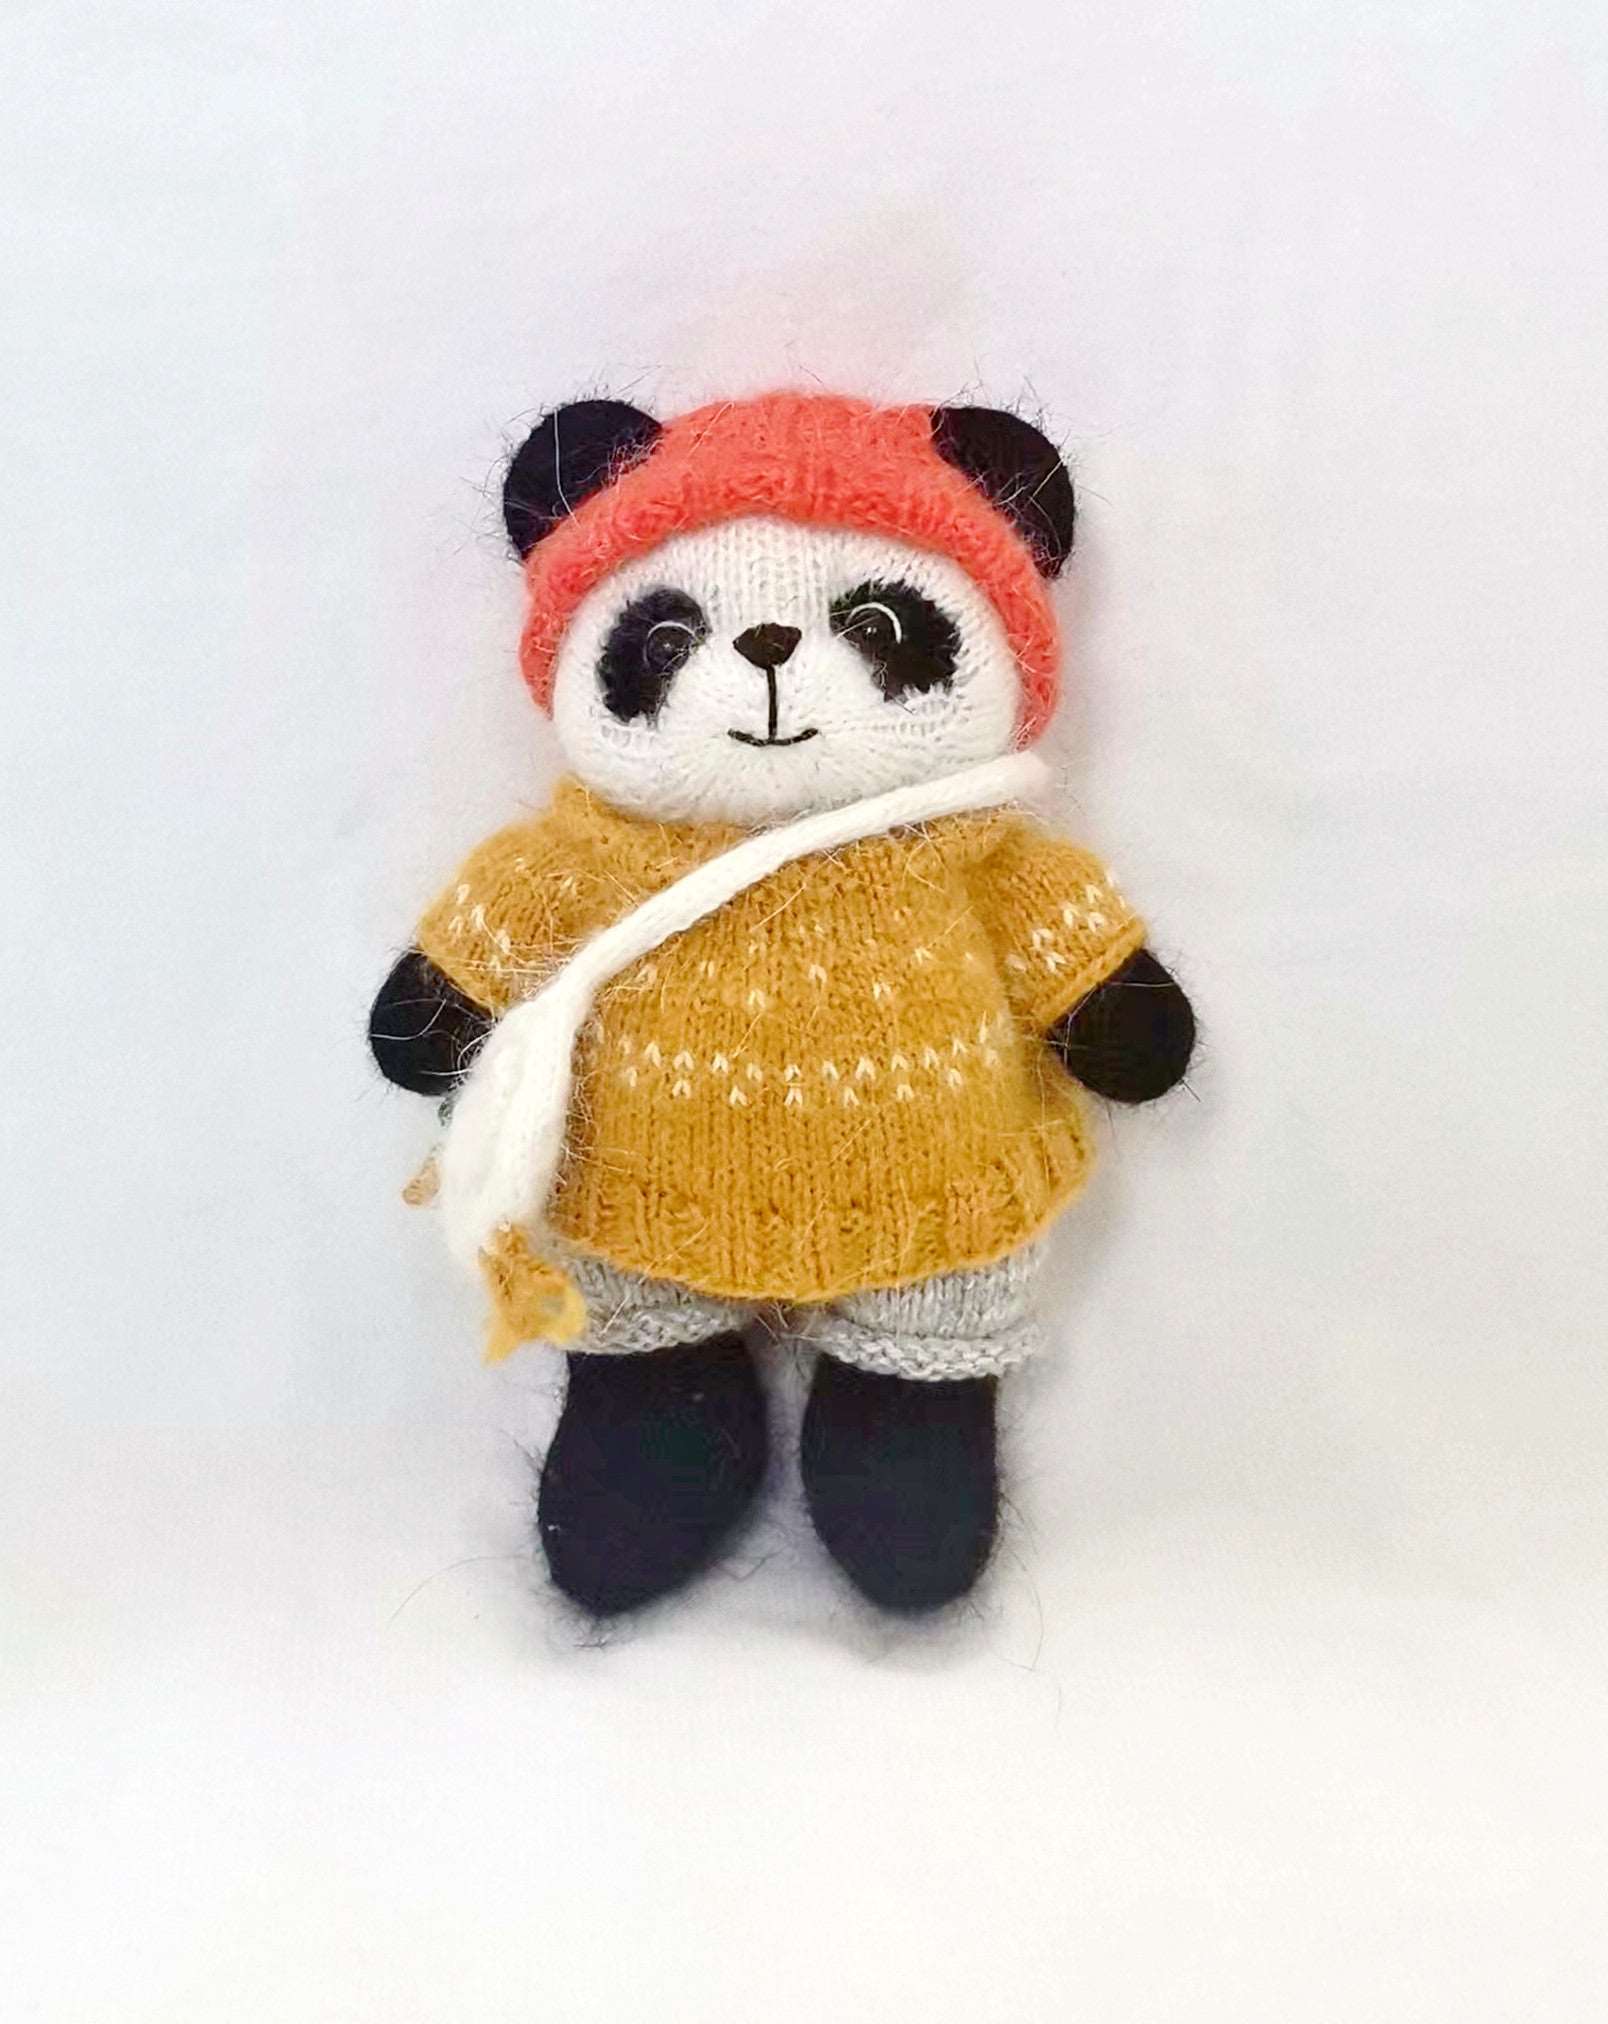 Charming Crocheted Panda Figurine Perfect for Display